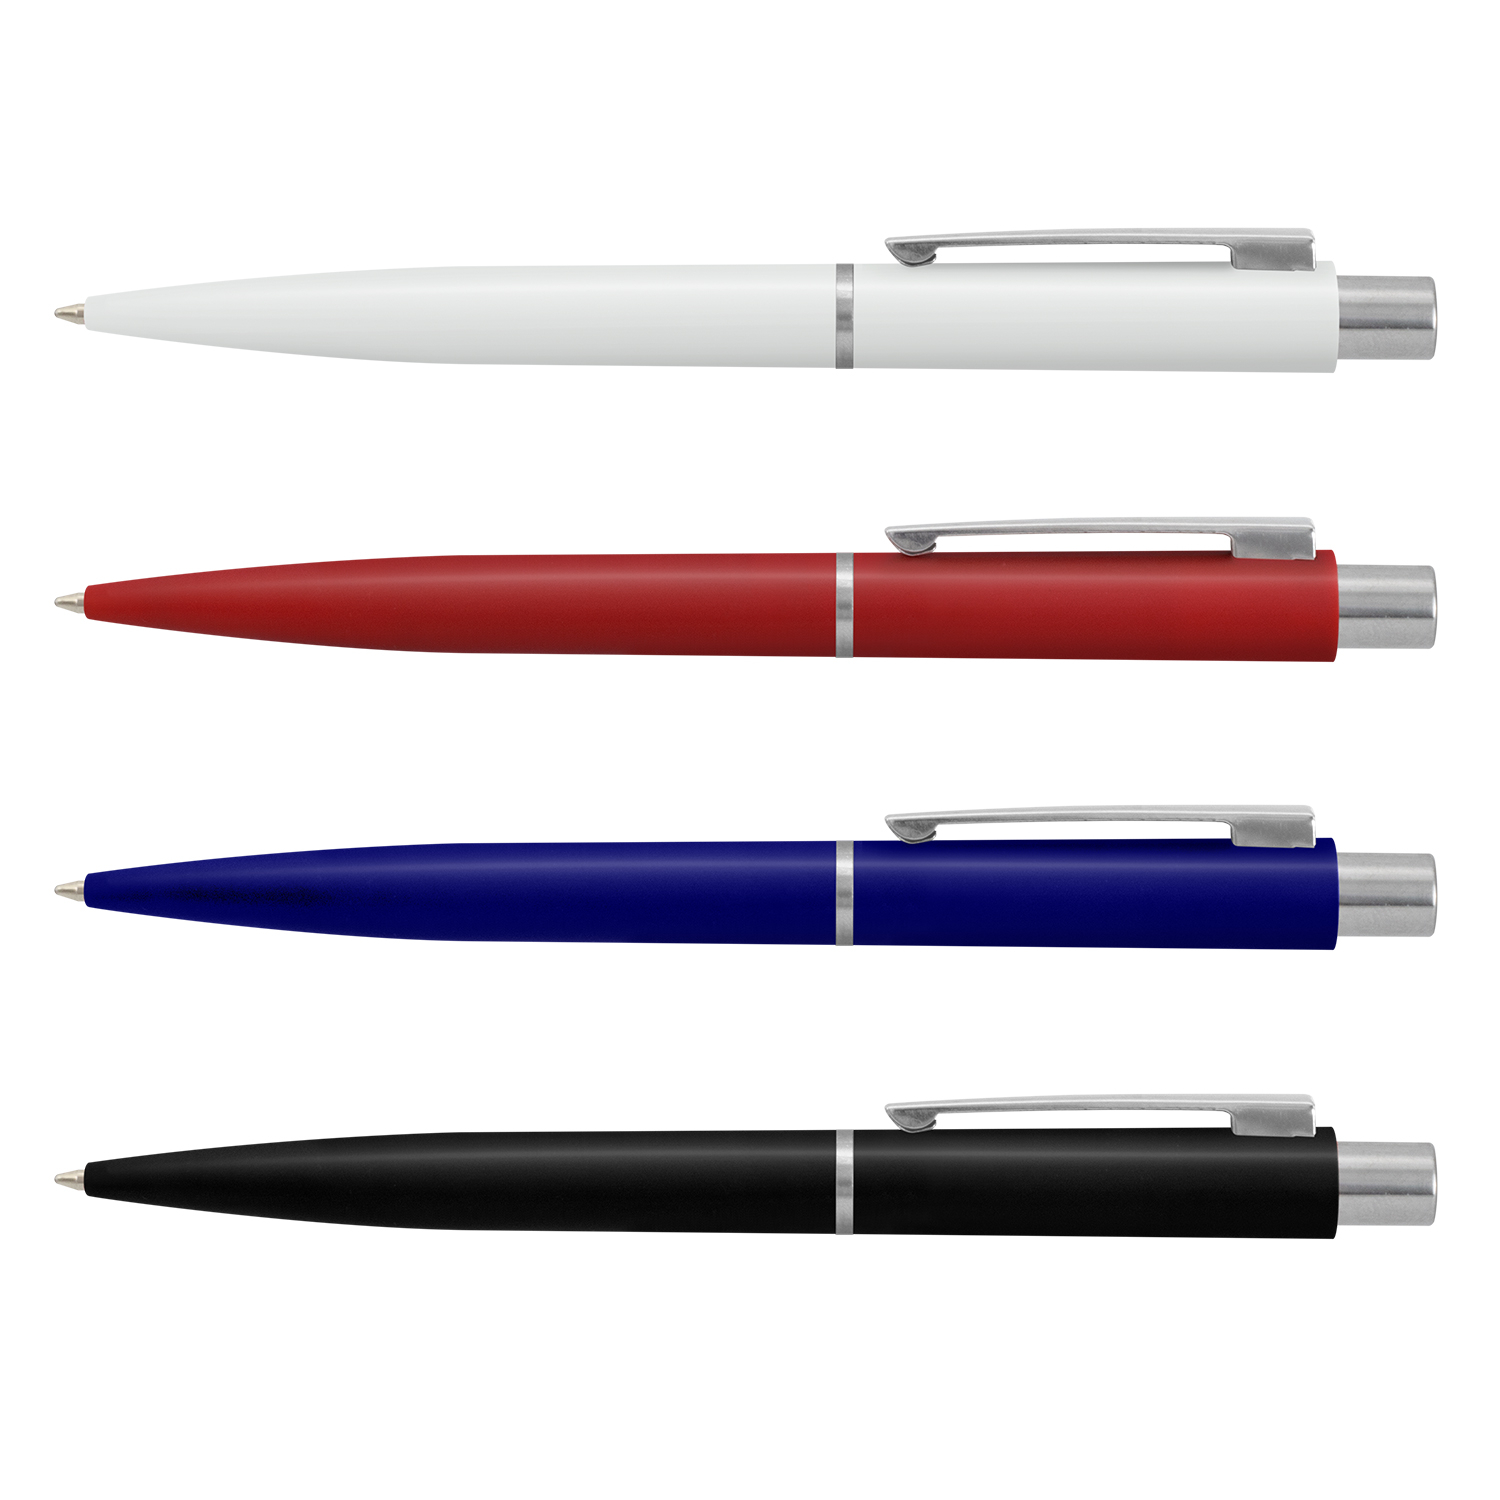 Blue Refill Saxon Pen pen